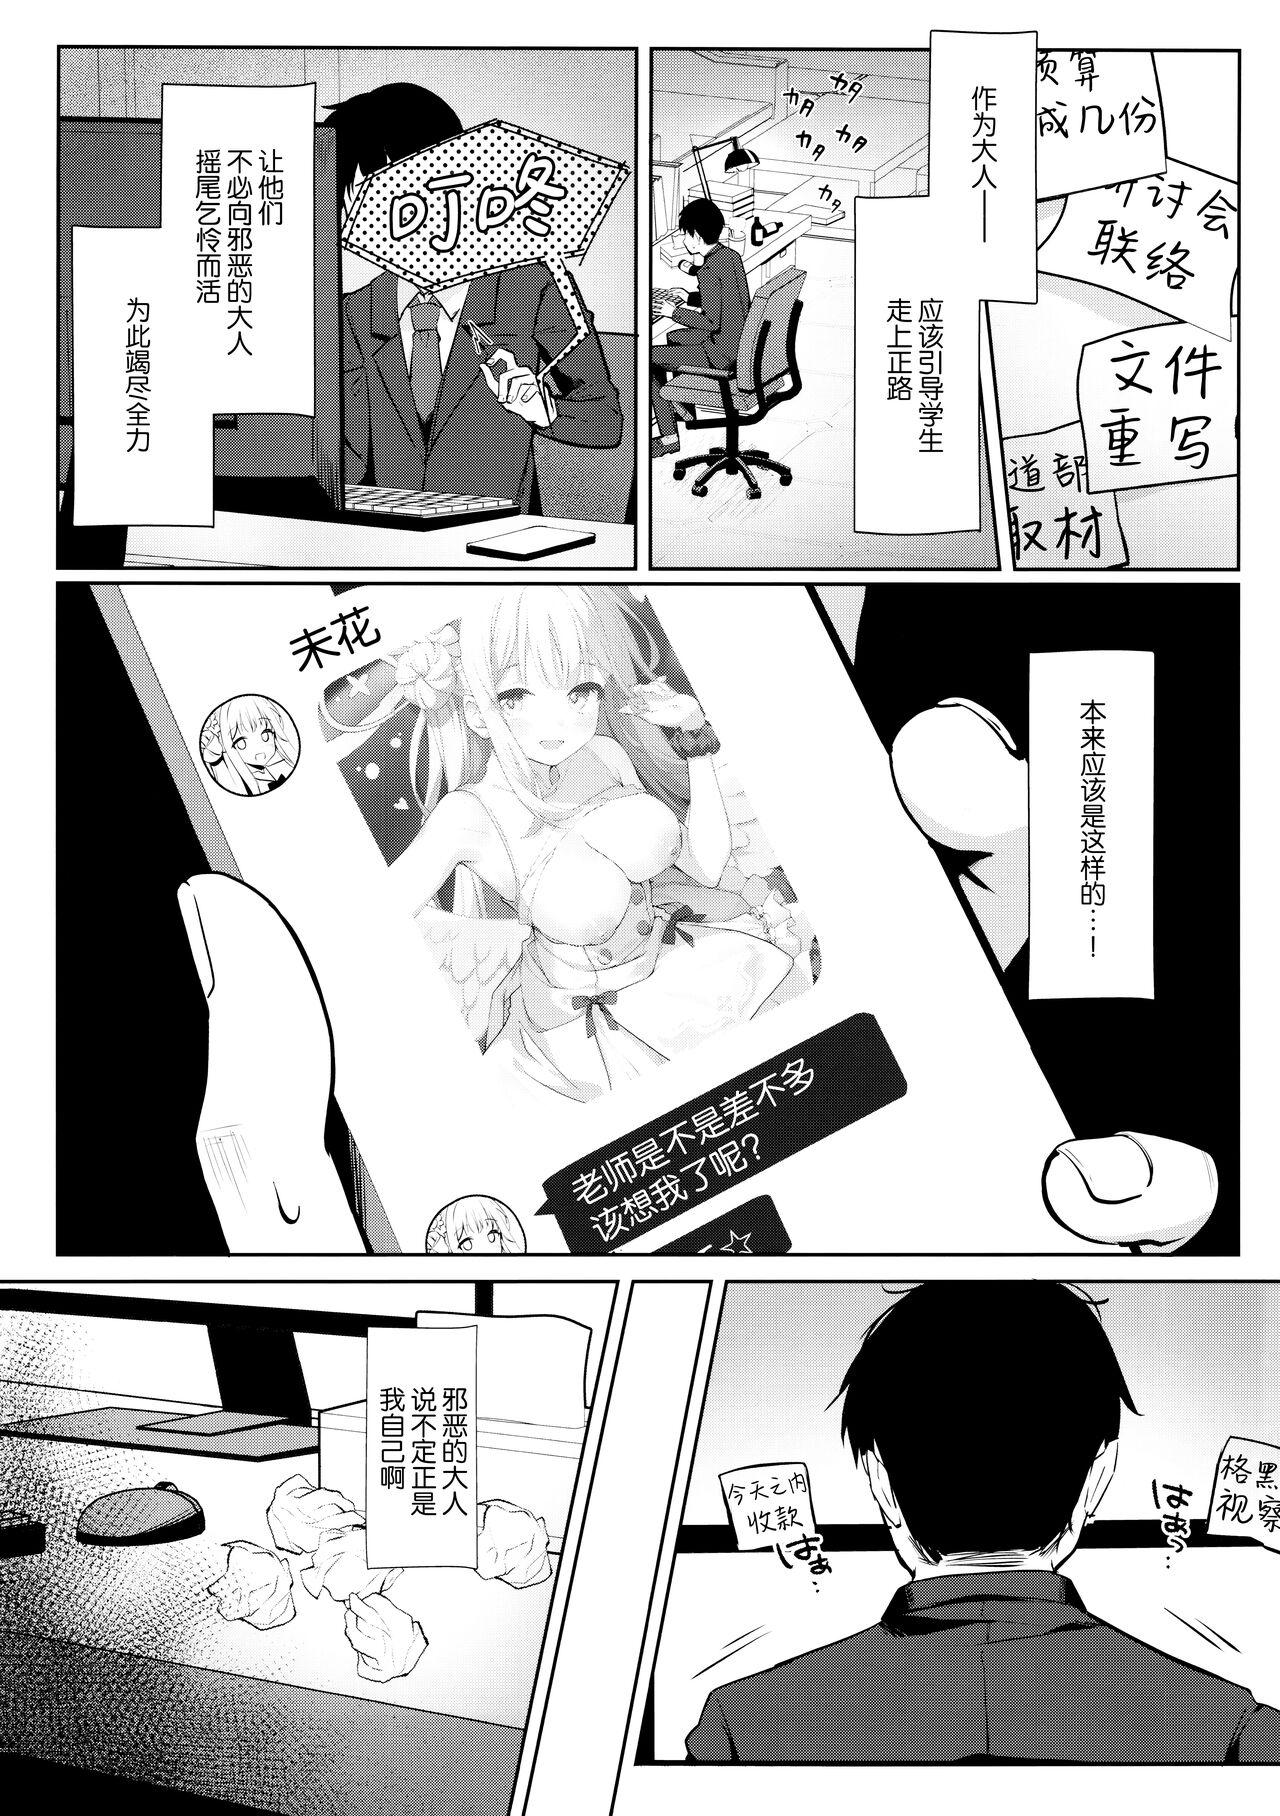 Gayemo Futari wa Kannbi na yoru no Hihou | 两人是香甜的夜之瑰宝 - Blue archive Bus - Page 5